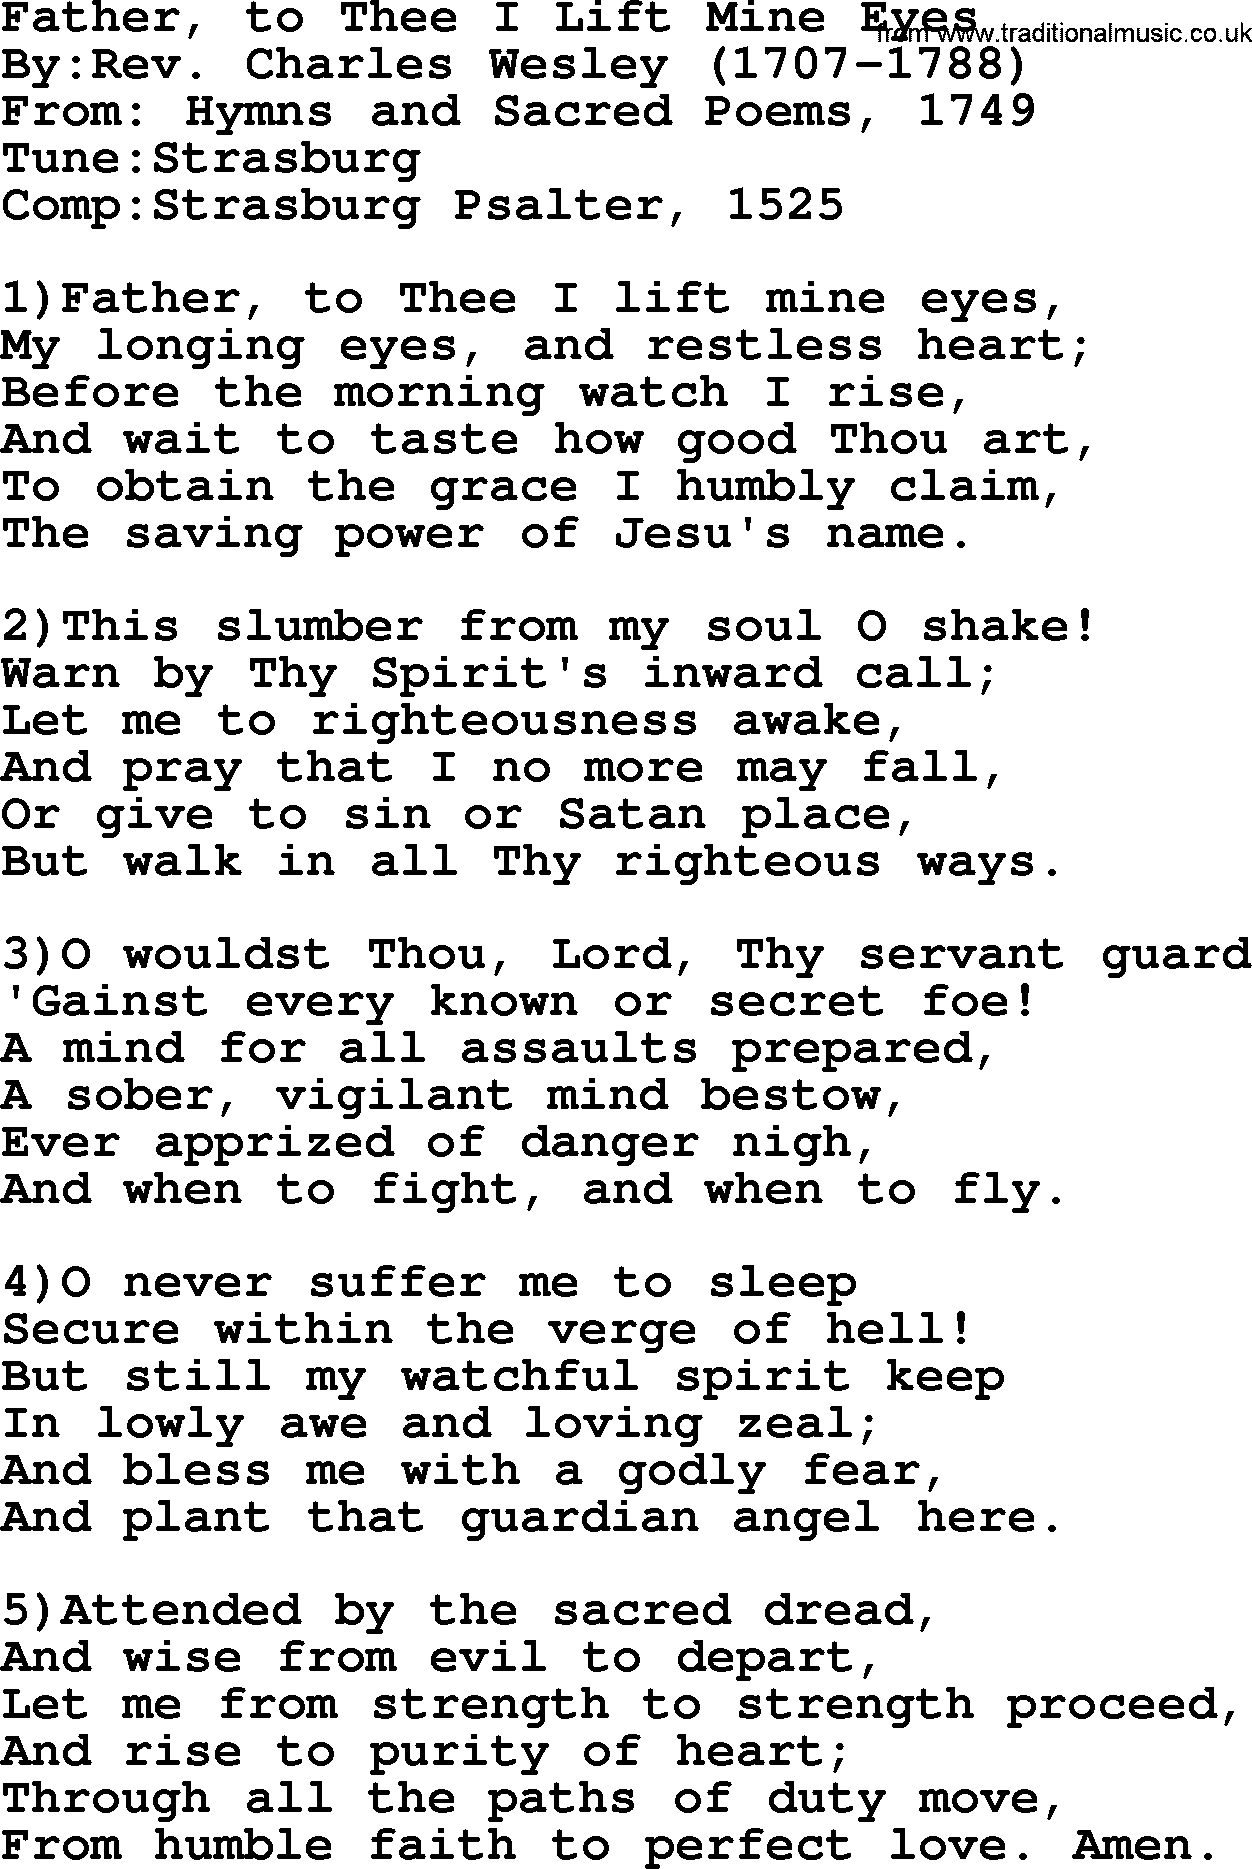 Methodist Hymn: Father, To Thee I Lift Mine Eyes, lyrics